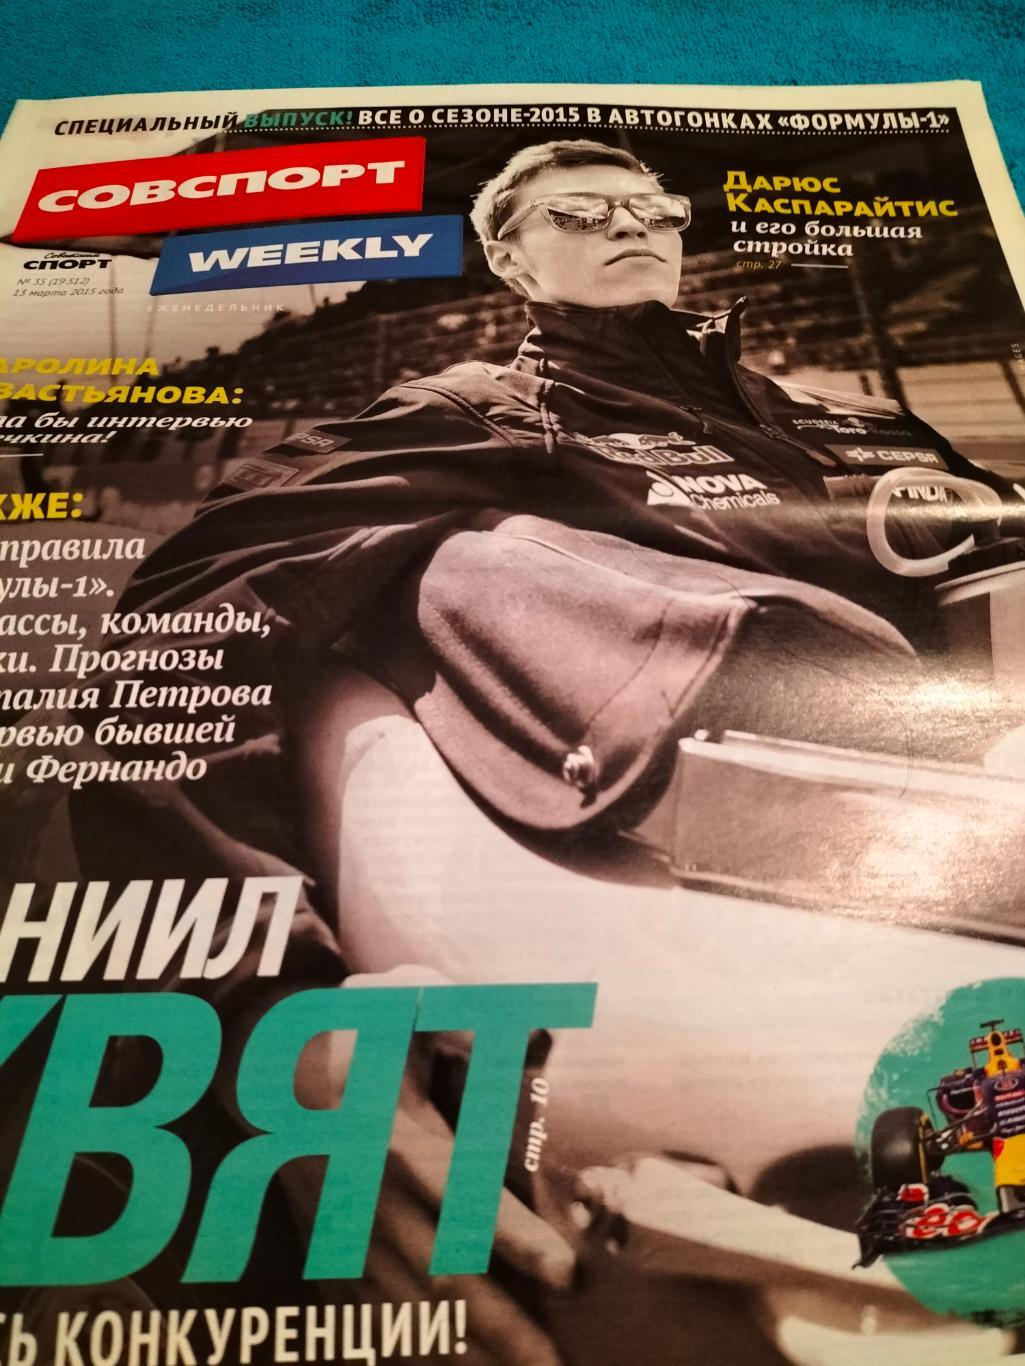 Советский Спорт Weekly №35 2015 год.